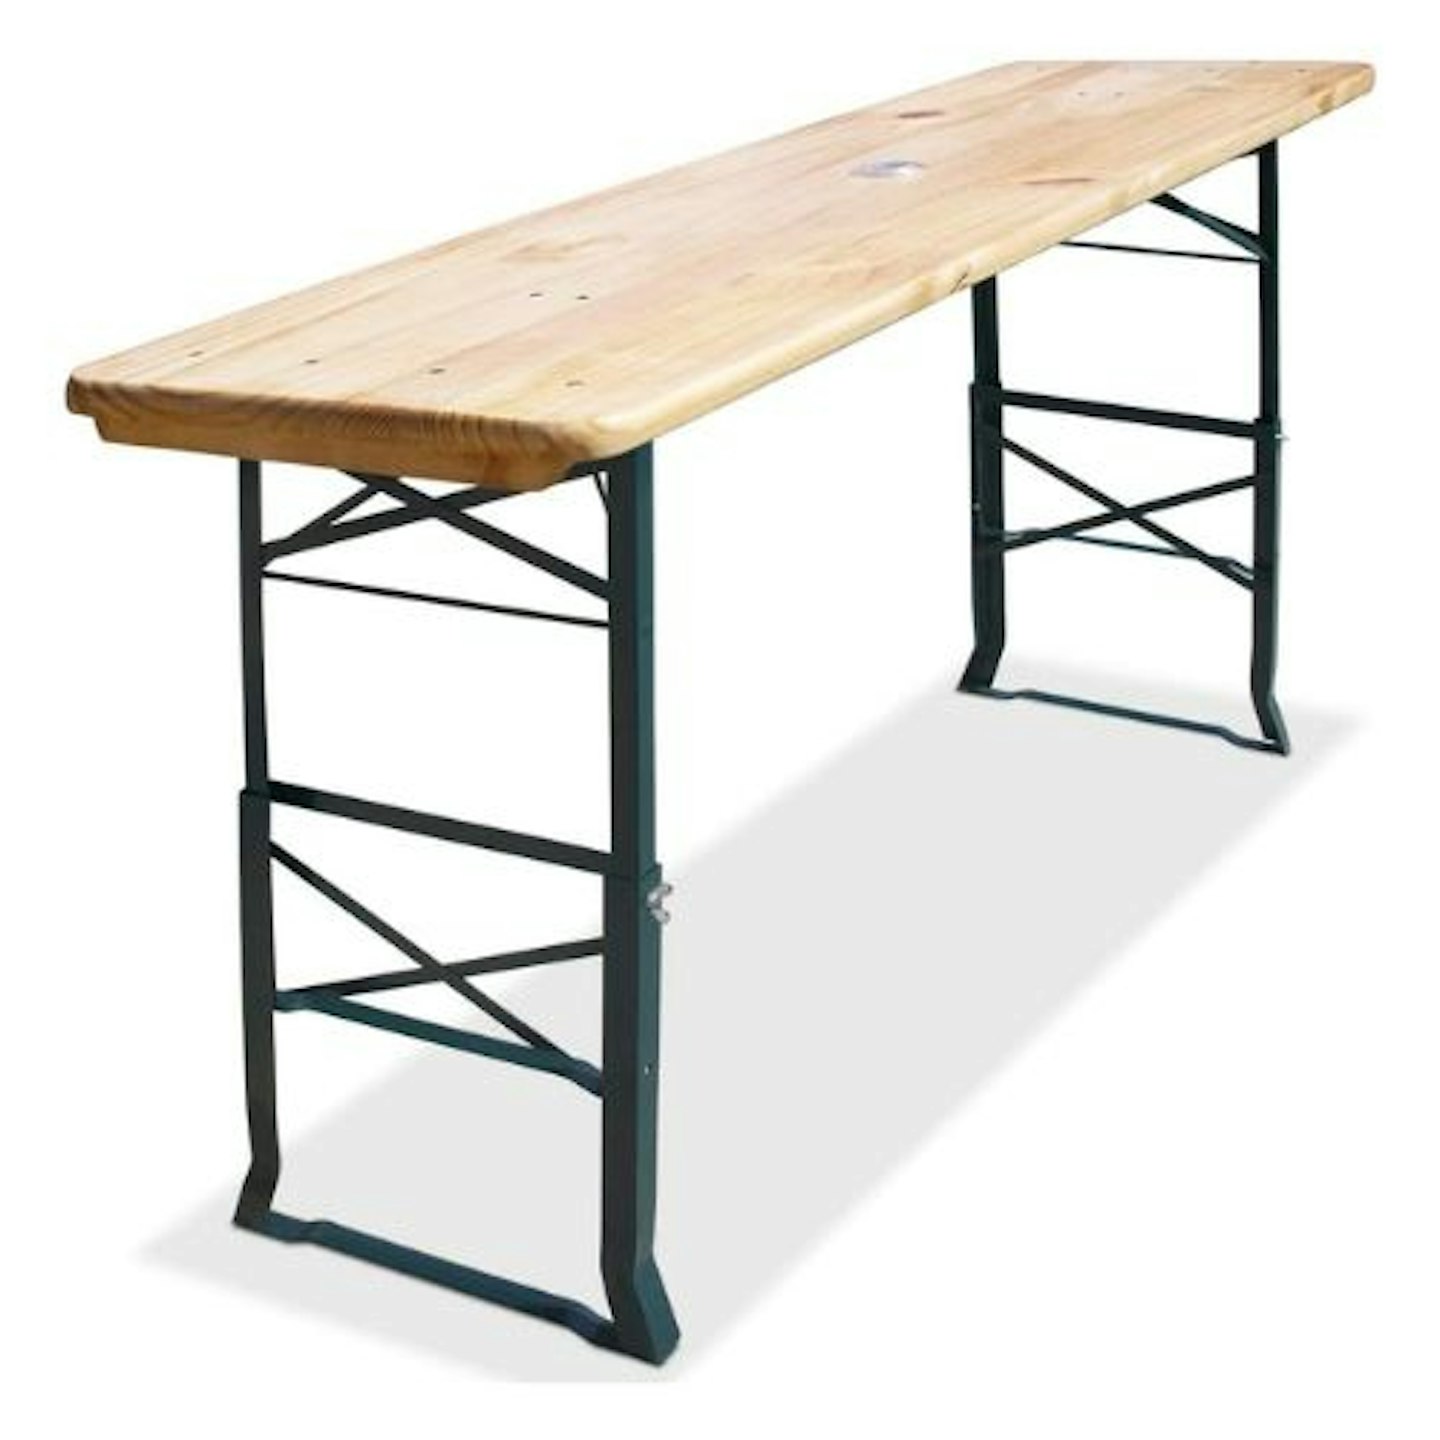 Deuba Wooden Table Foldable Height Adjustable Outdoor Indoor Breakfast Bar Garden Furniture Kitchen Counter Party 180cm Folding Picnic